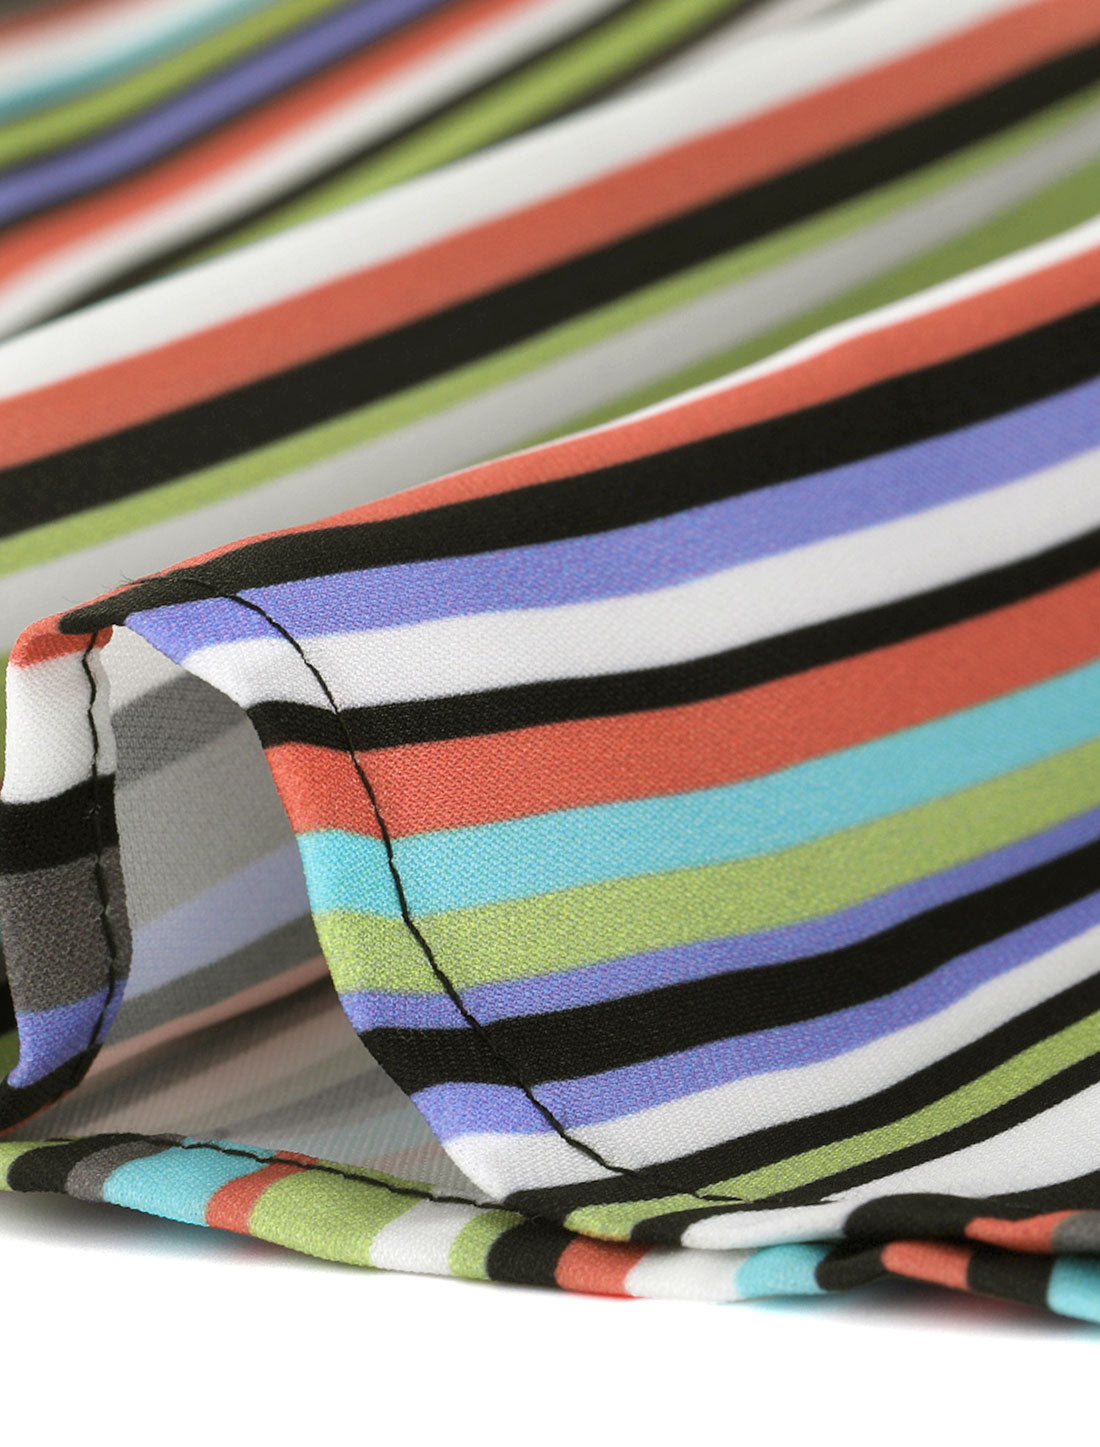 Bublédon Polyester H Line Vertical Stripe Long Sleeve Shirt